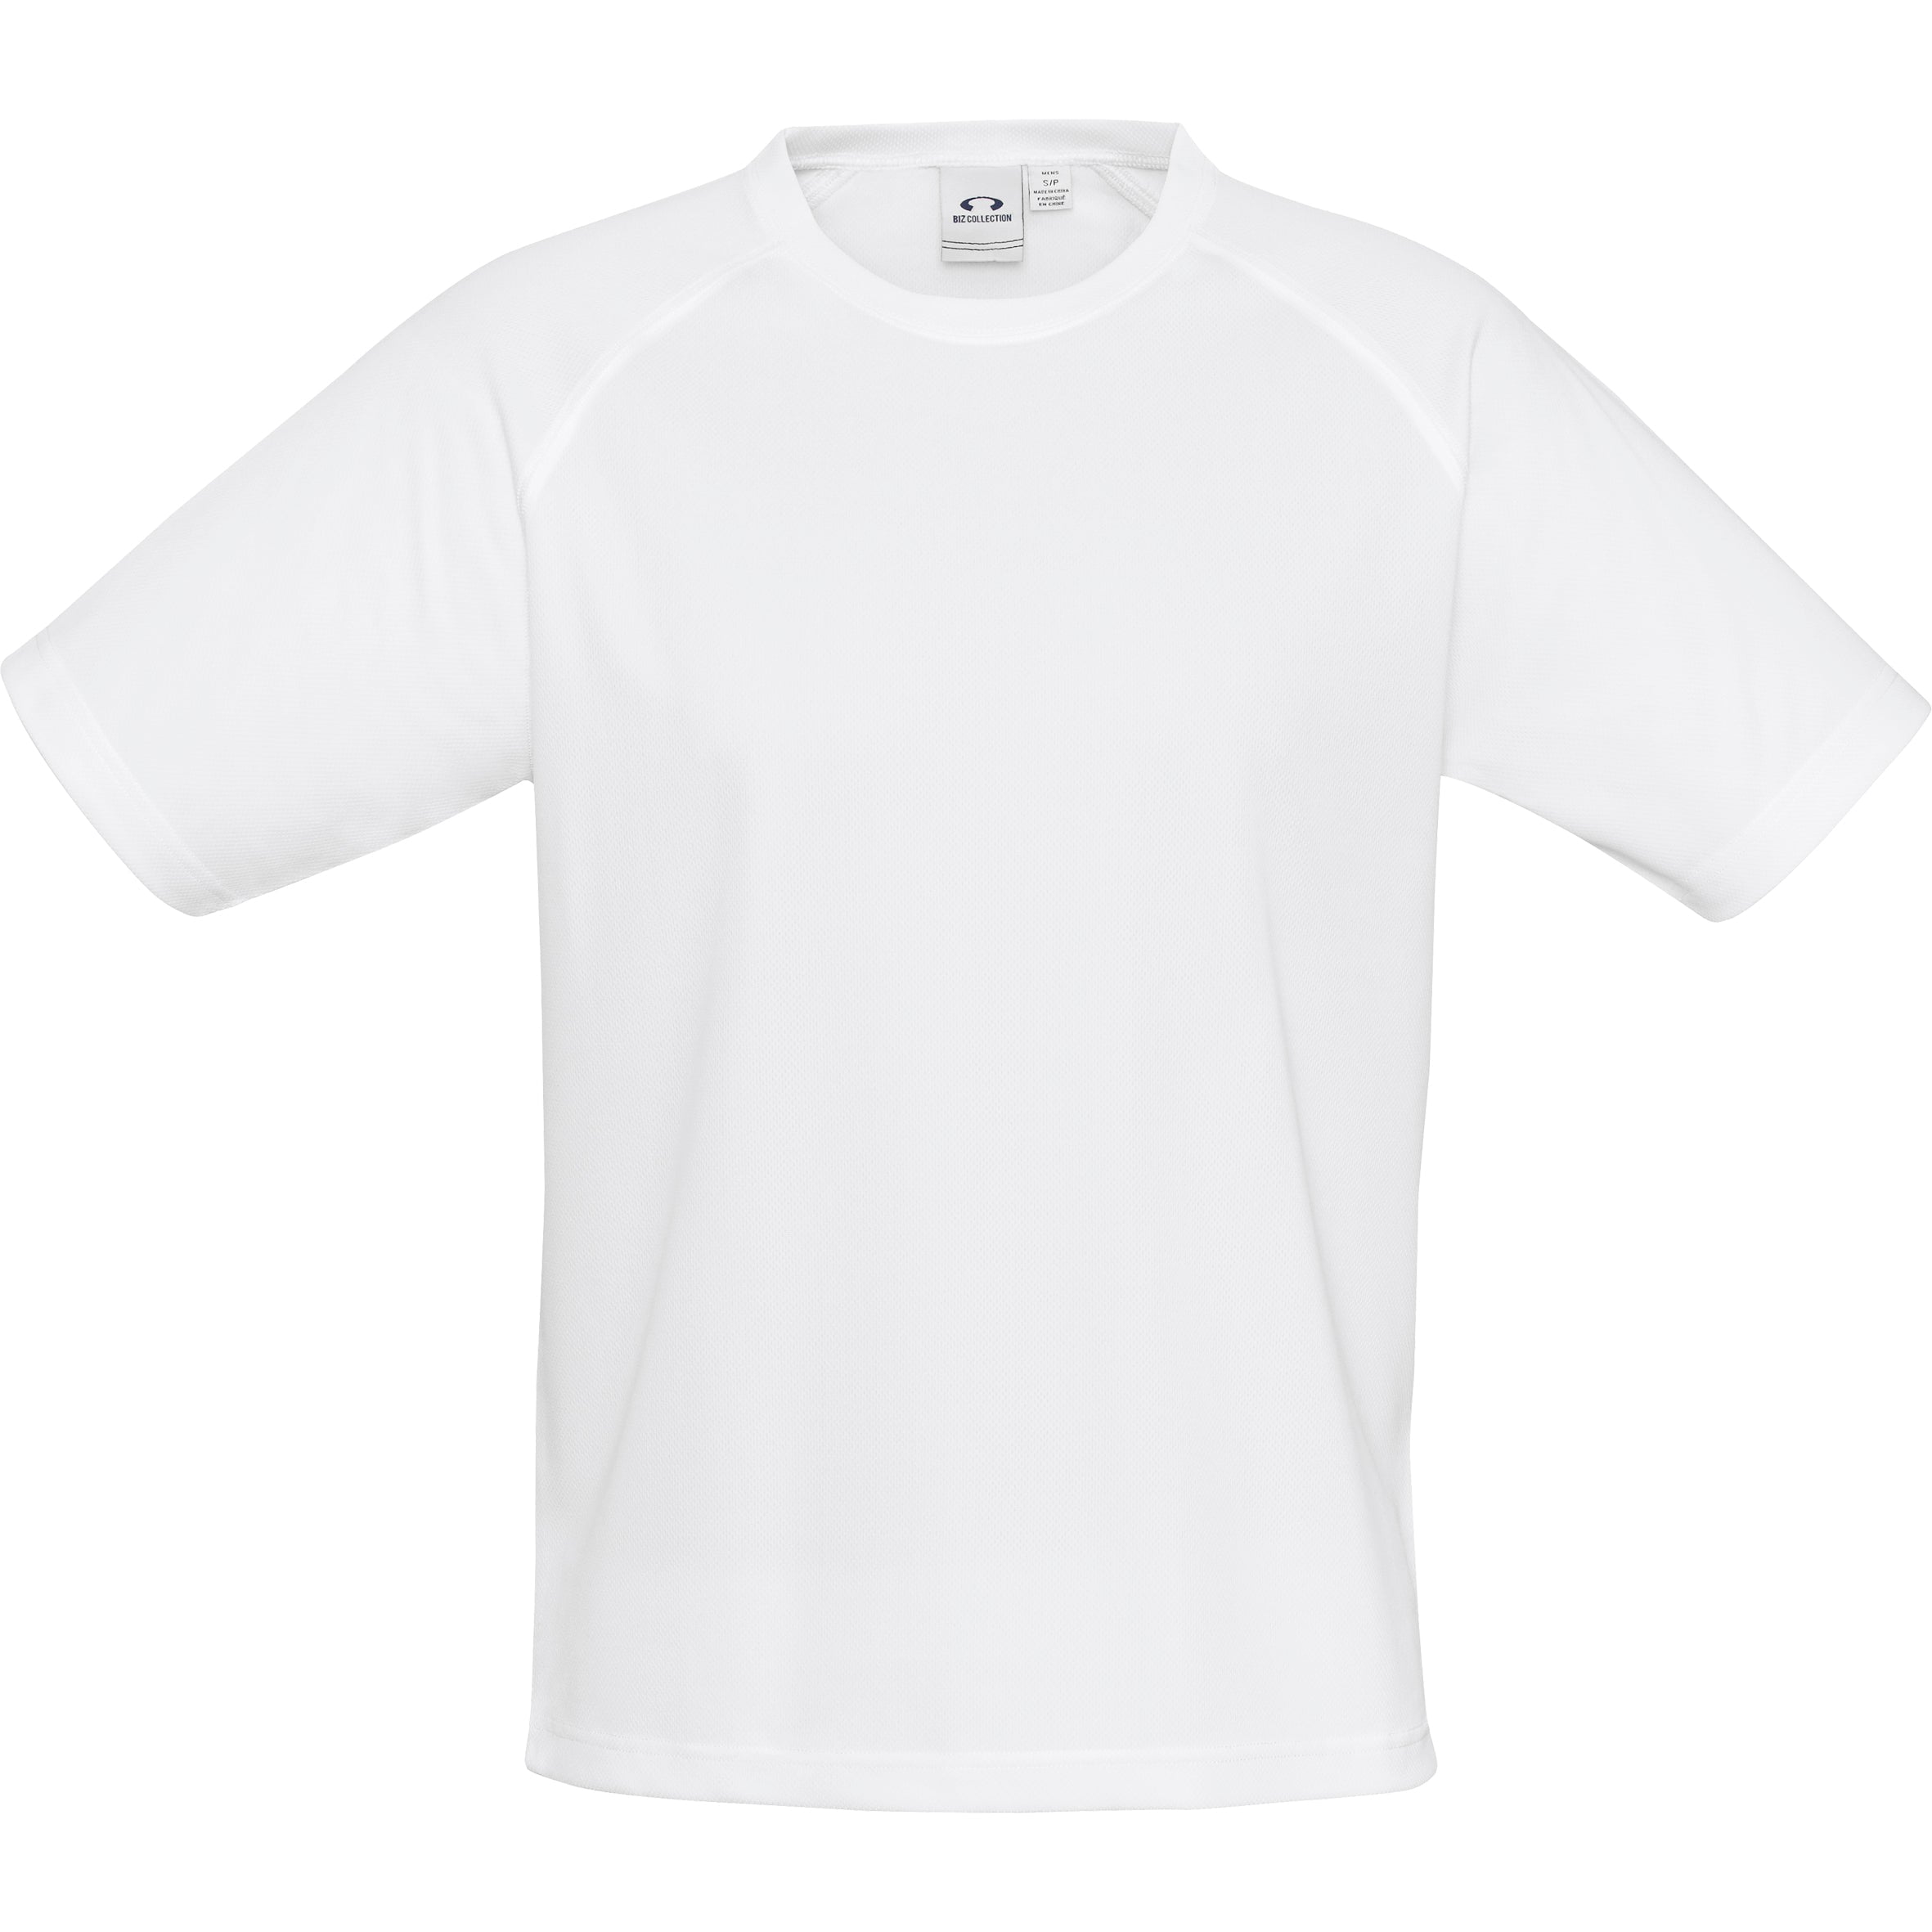 Kids Sprint T-Shirt-4-White-W